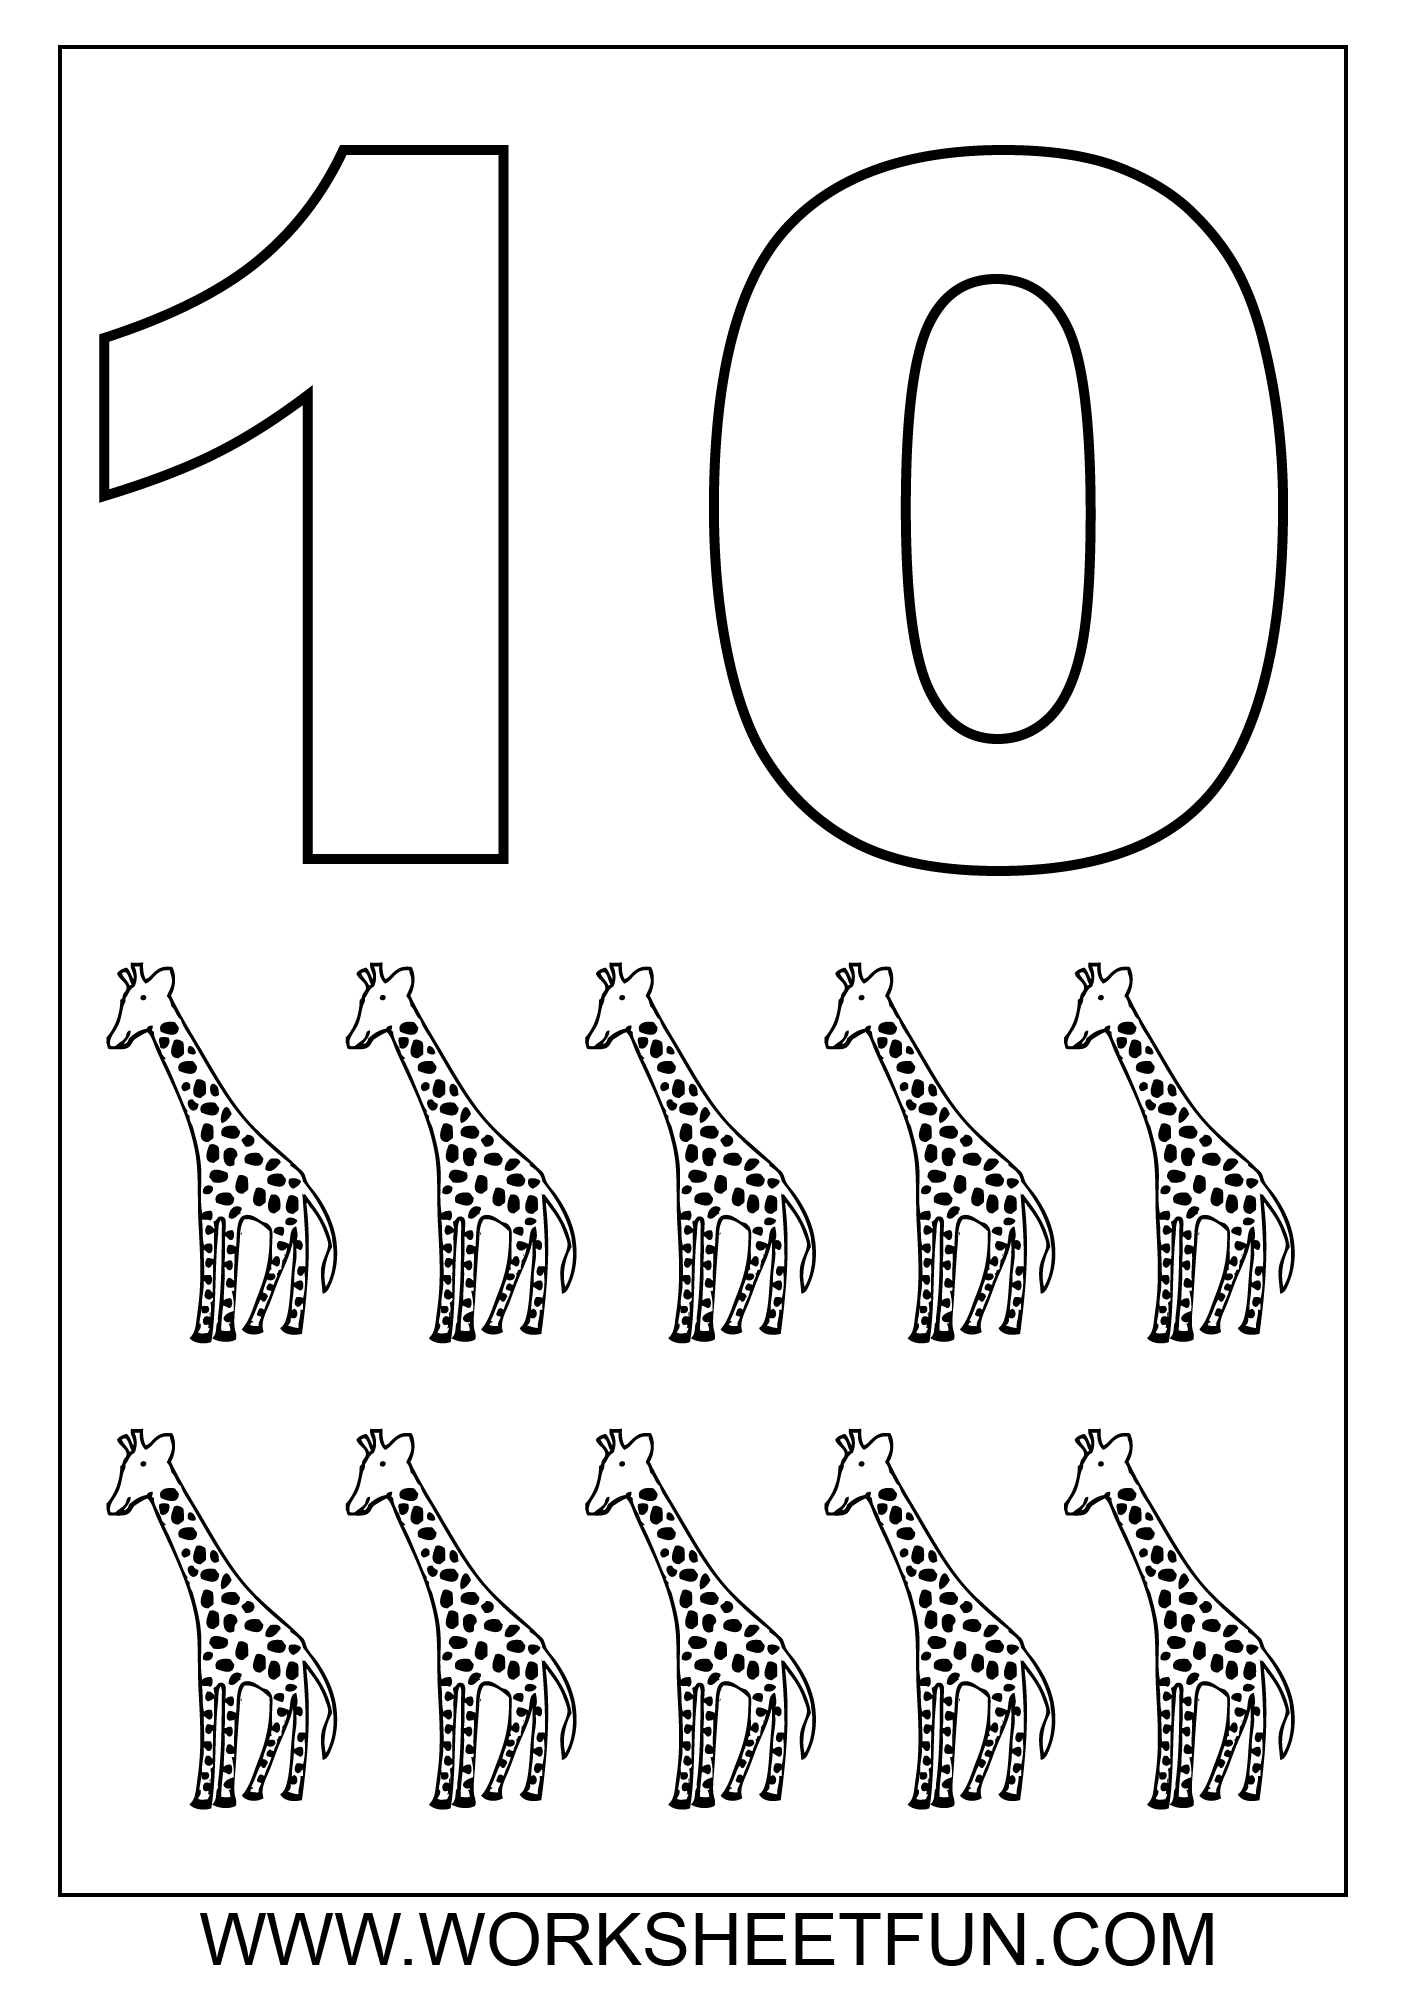 16 Best Images Of Numbers 1 50 Worksheets Kindergarten Number Worksheets 1 10 Missing Numbers